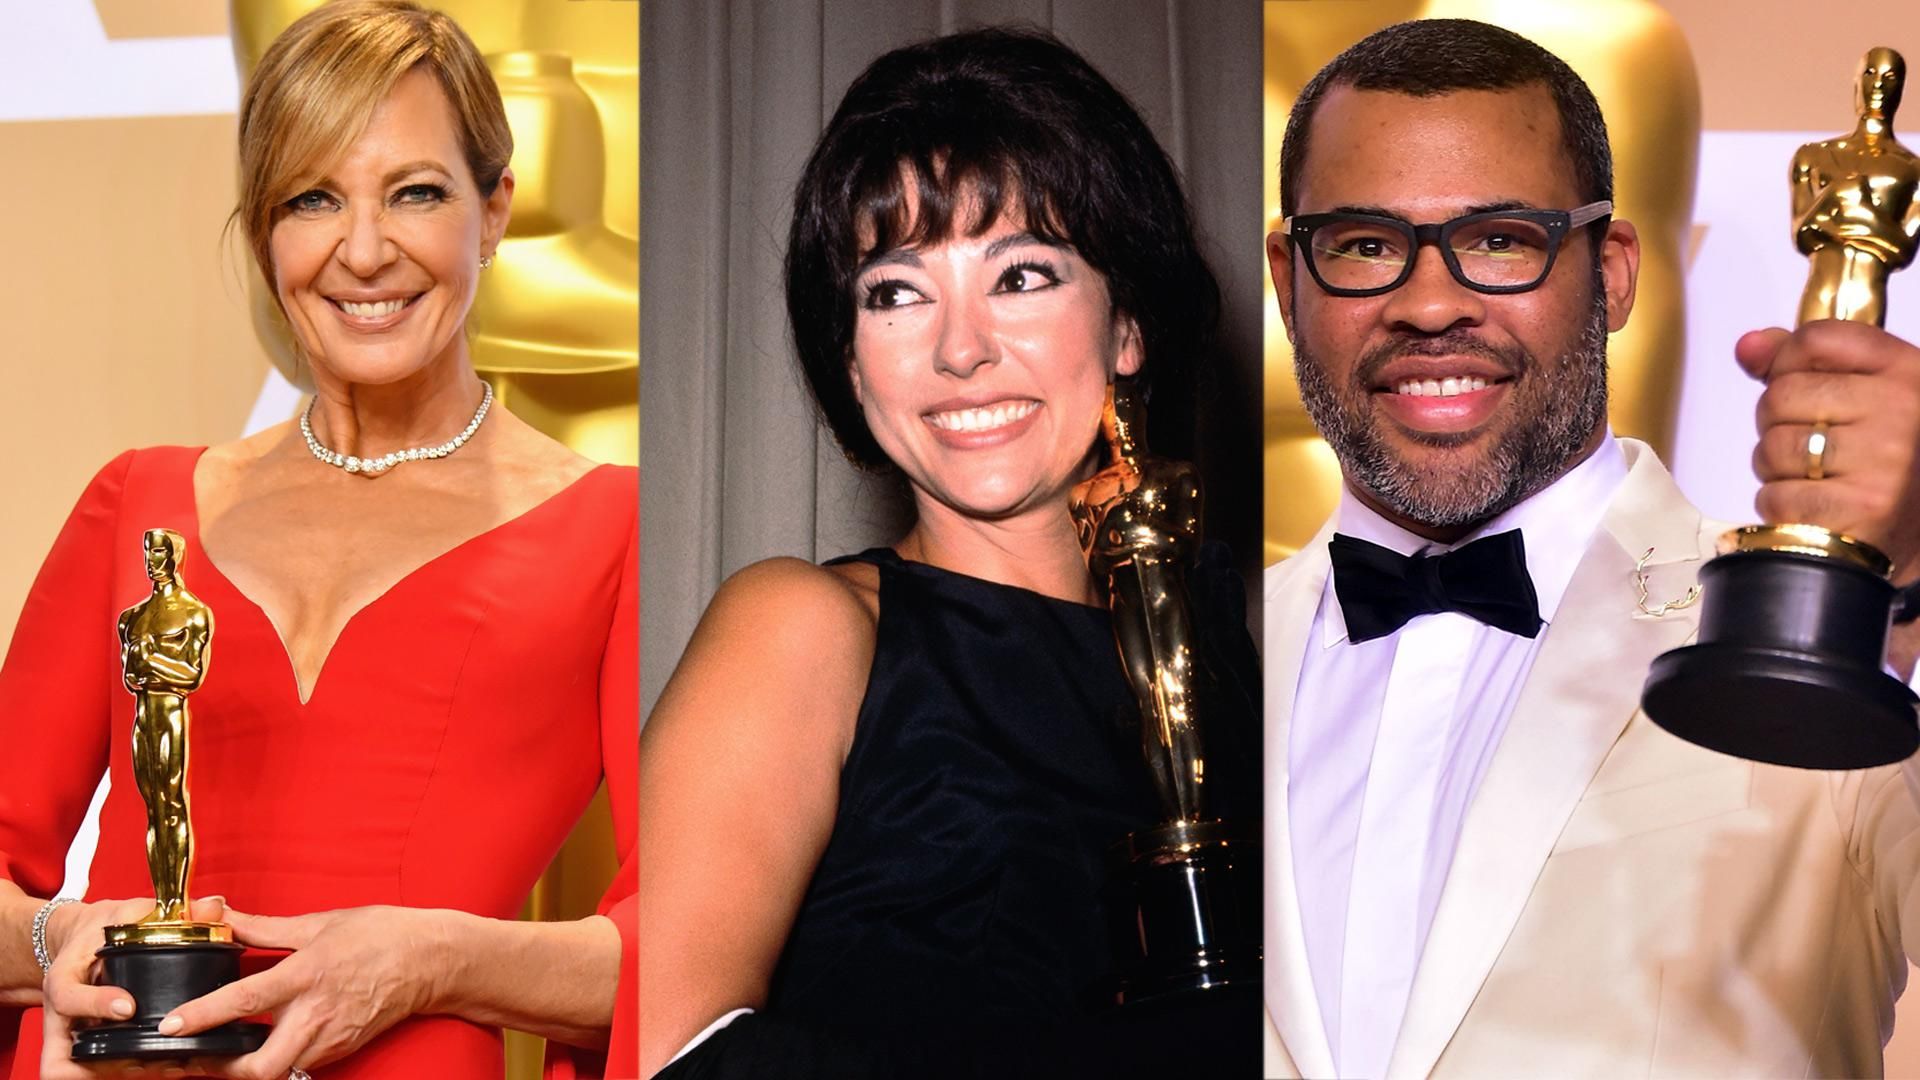 A triptych of Oscar winners includes Allison Janney next to Rita Moreno and Jordan Peele